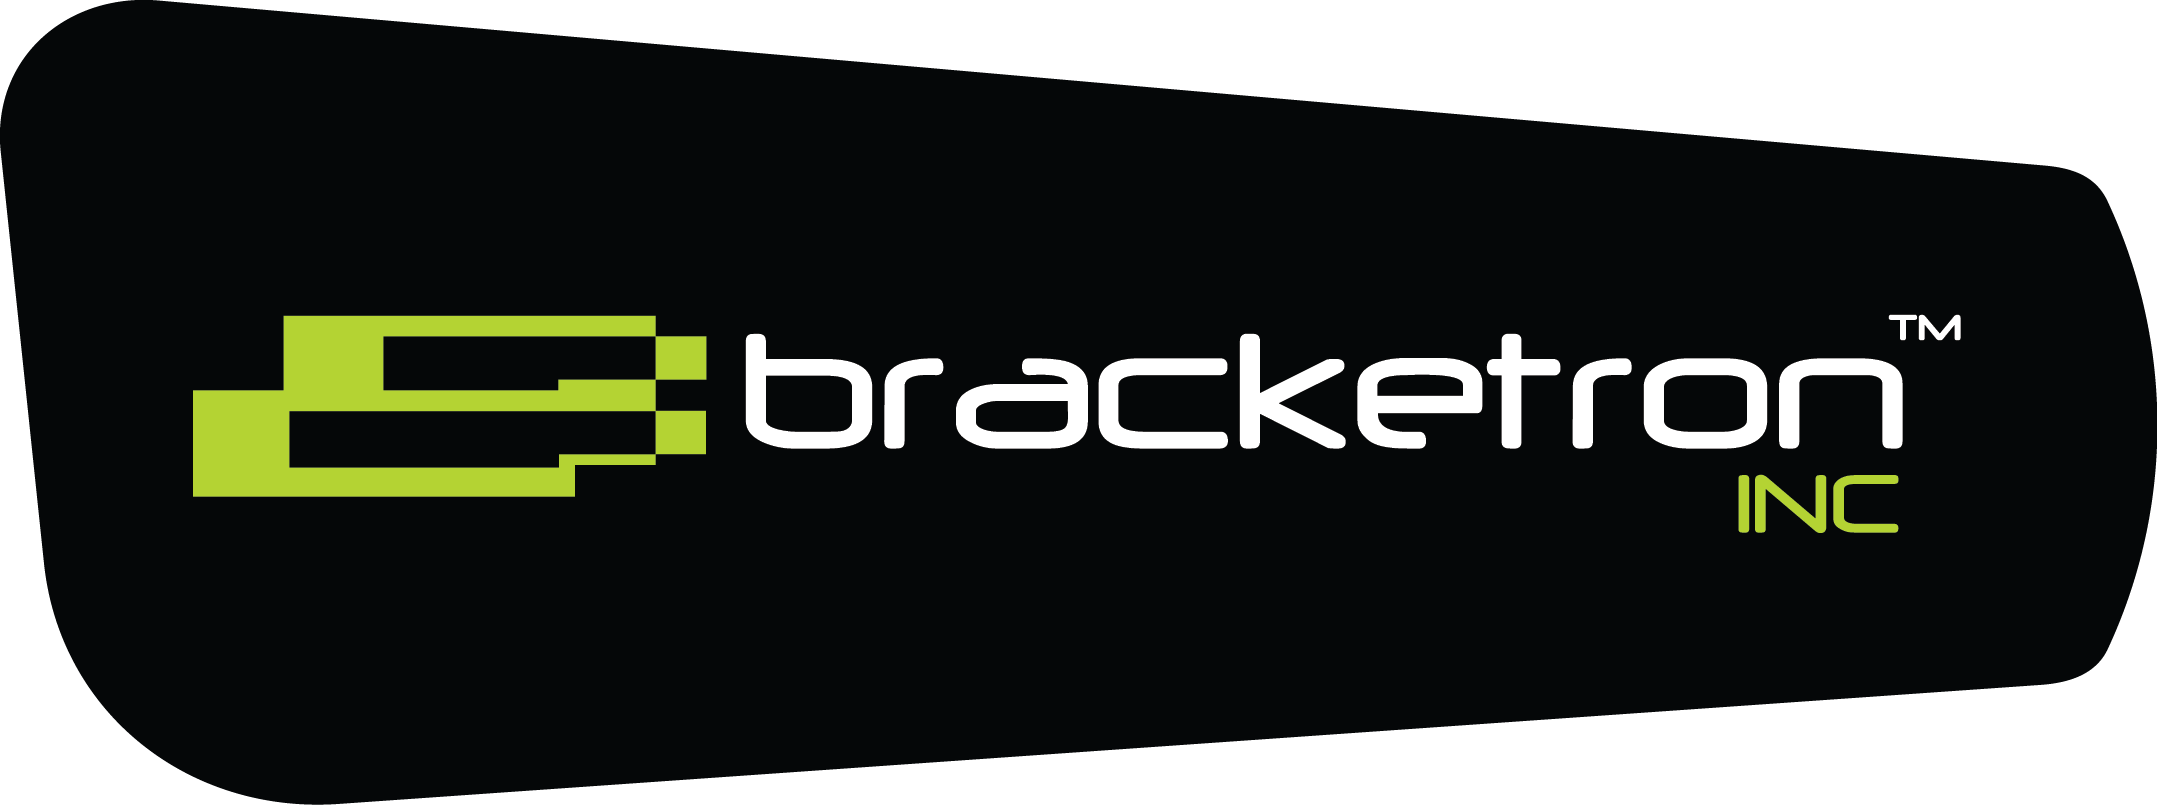 Bracketron Logo - Bracketron logo | Frequency Telecom